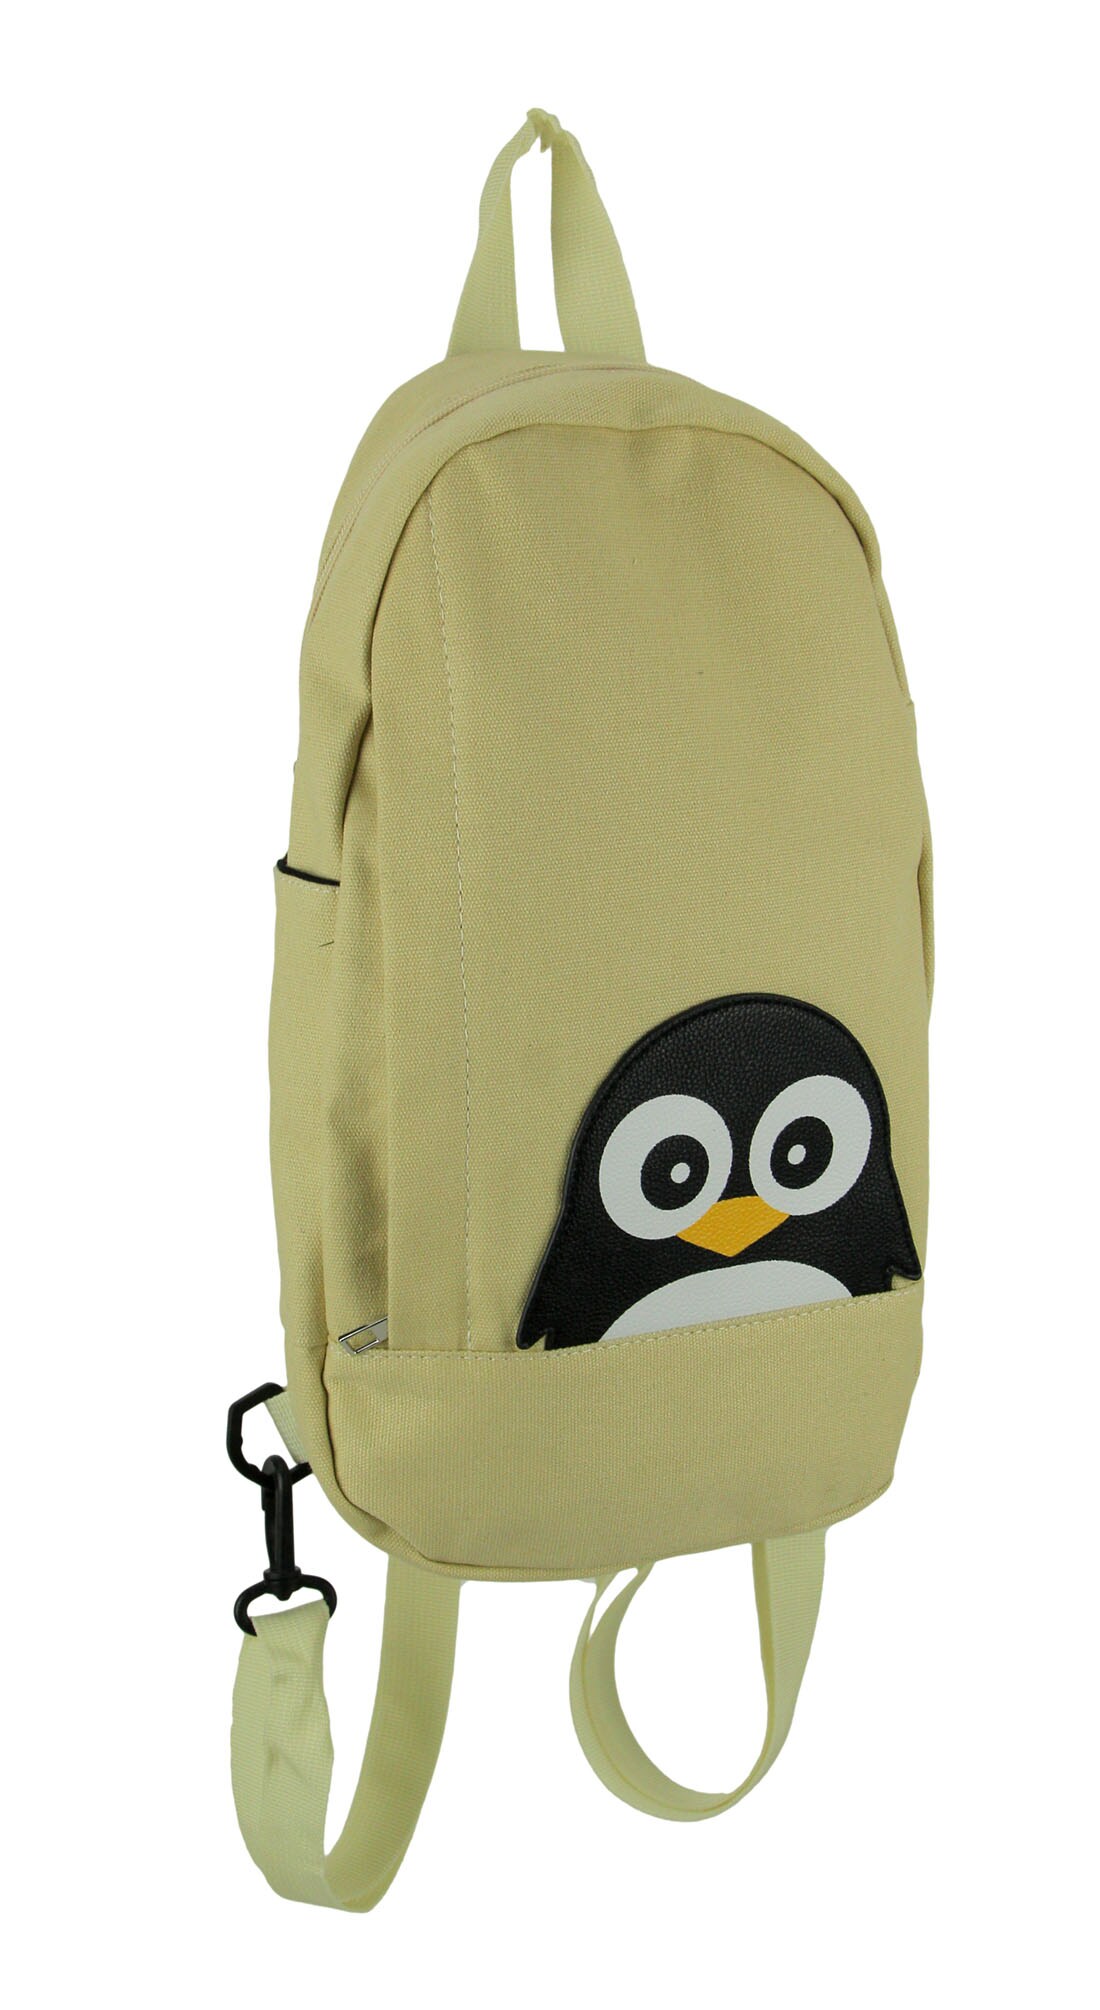 Sleepyville Critters Beige Canvas Peeking Penguin Backpack or Sling Bag Small